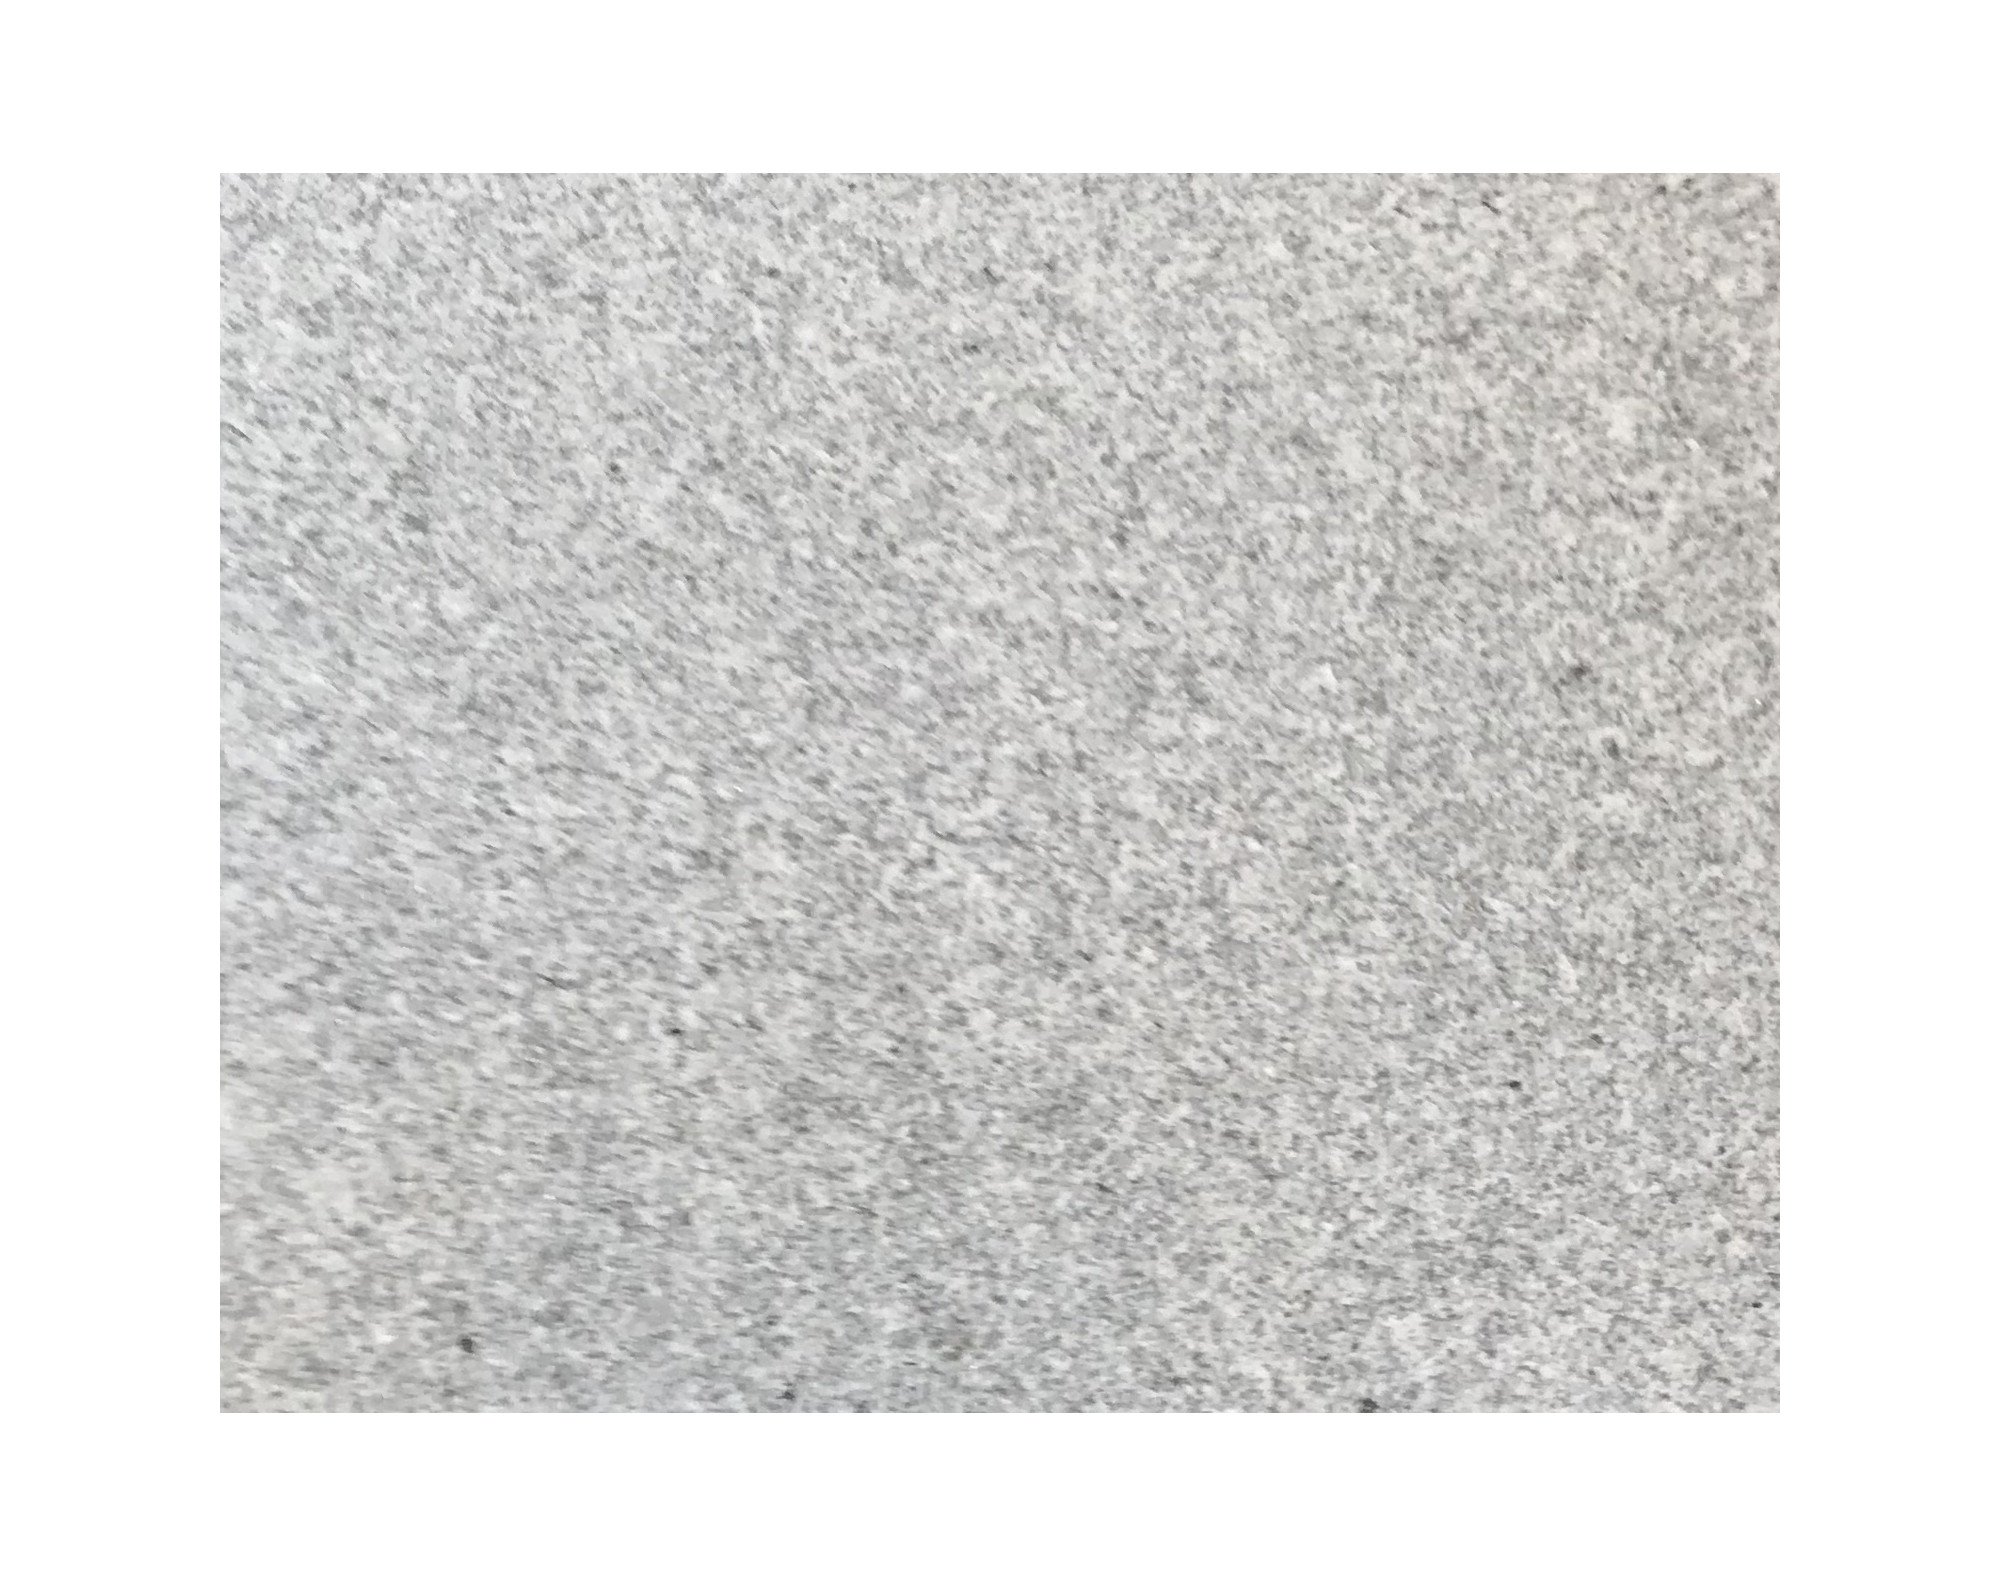 Harmo roc napoliset, natura-serie, ovaal d: 6,00mx12,60m, diamantgrijs, graniet